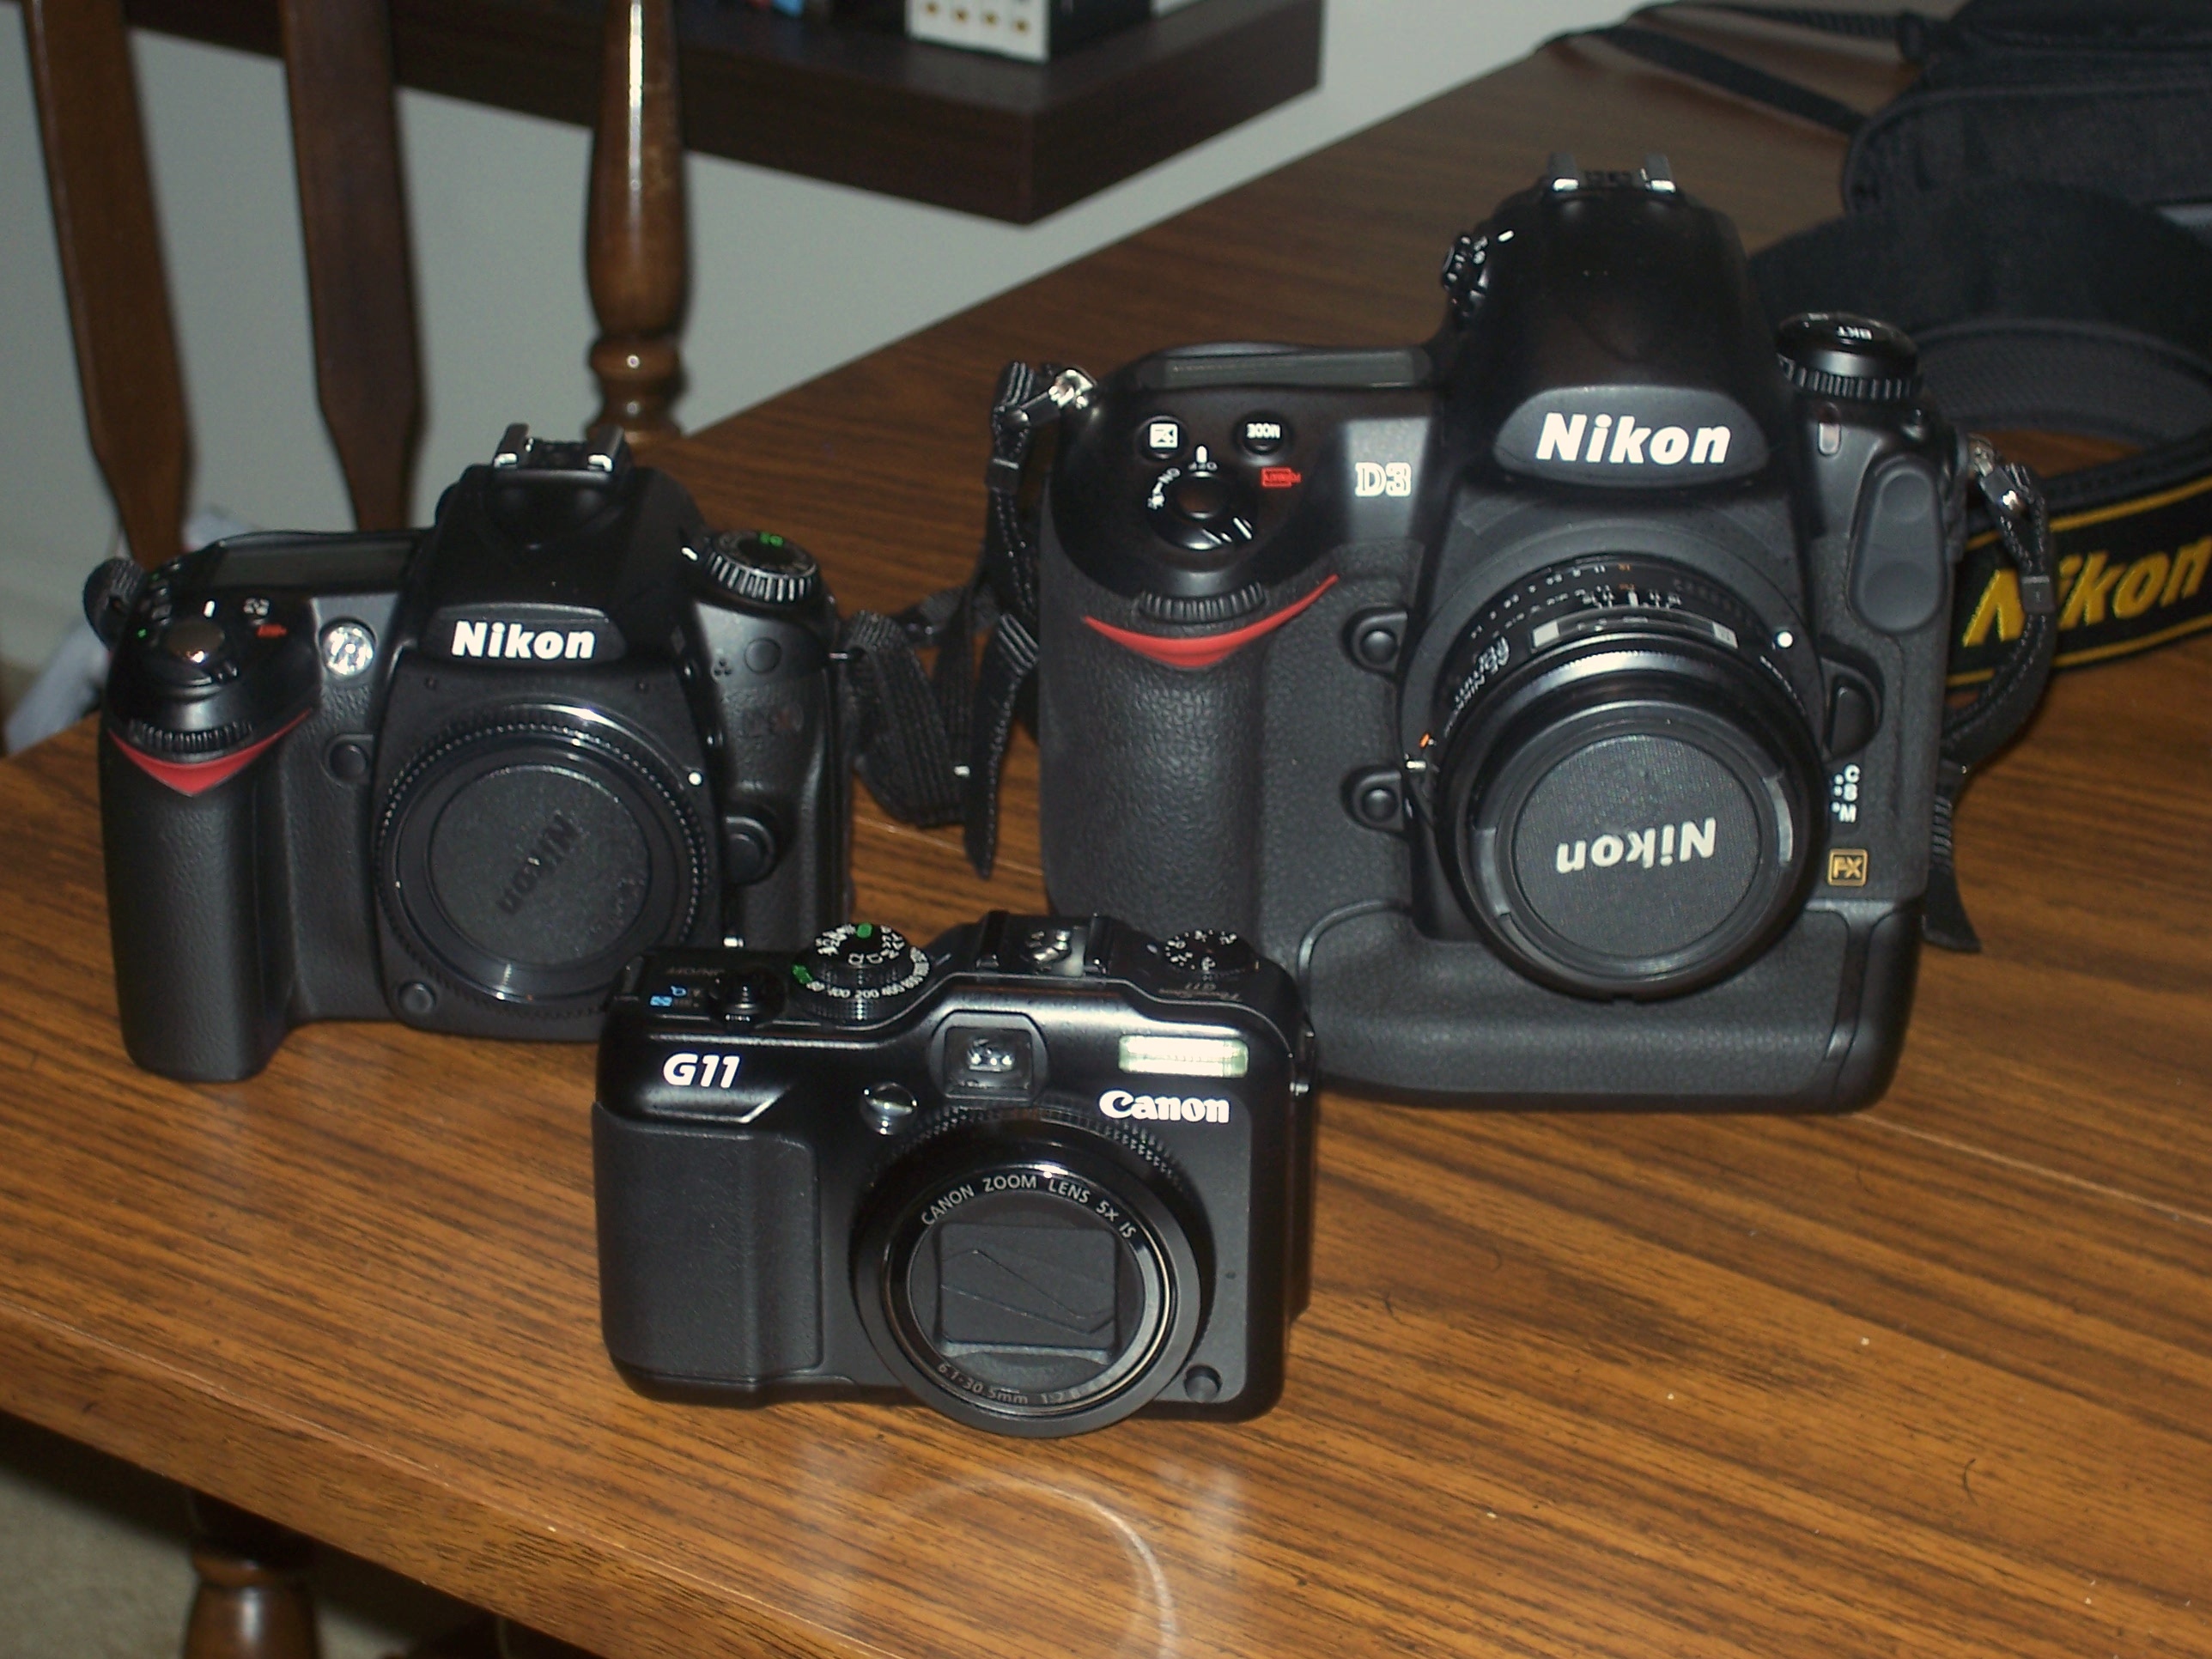 Canon PowerShot G11, Nikon D3, Nikon D90